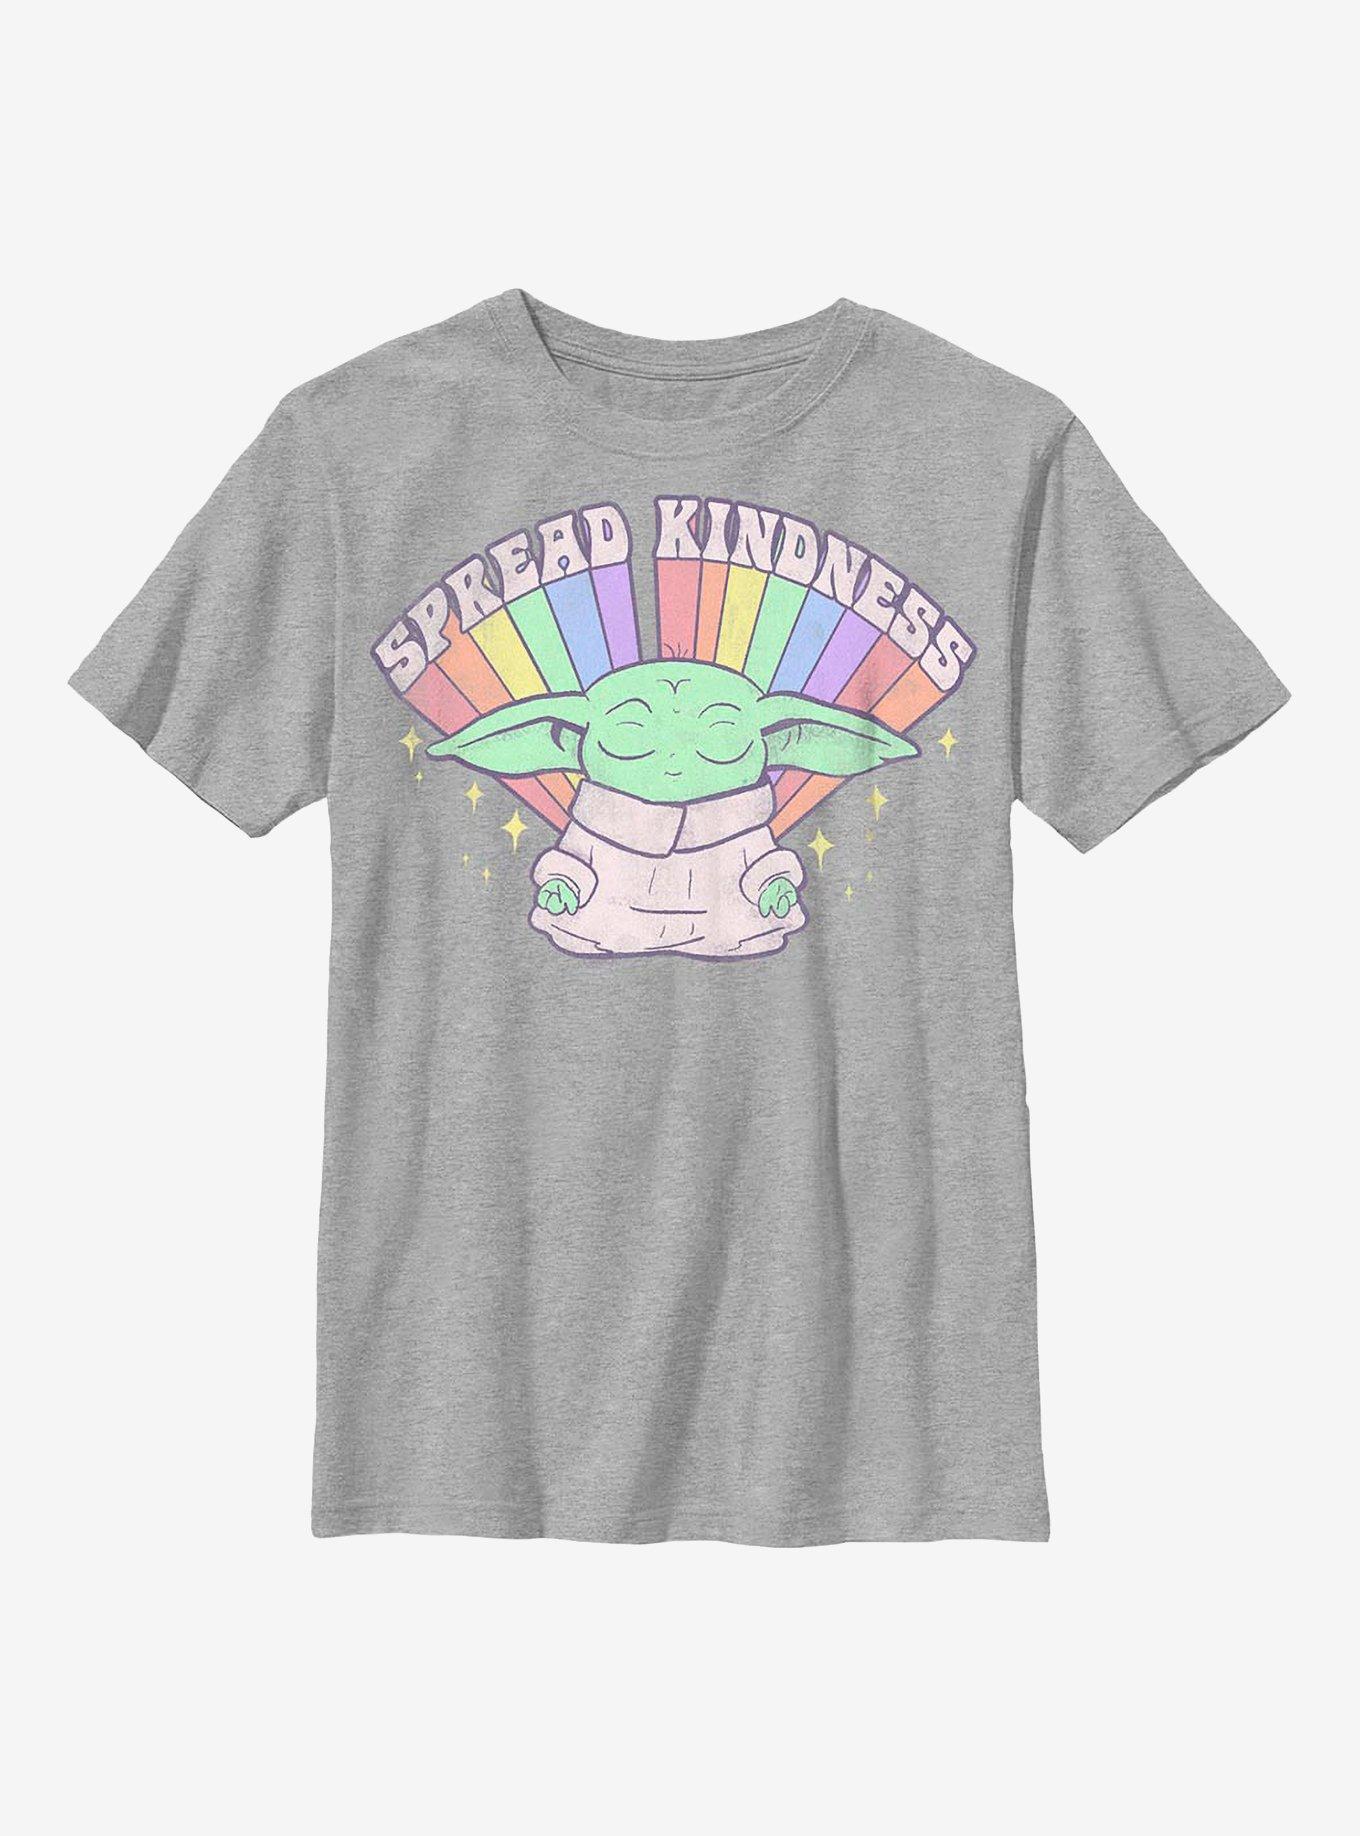 Star Wars The Mandalorian Pride Meditate Kindness Youth T-Shirt, ATH HTR, hi-res